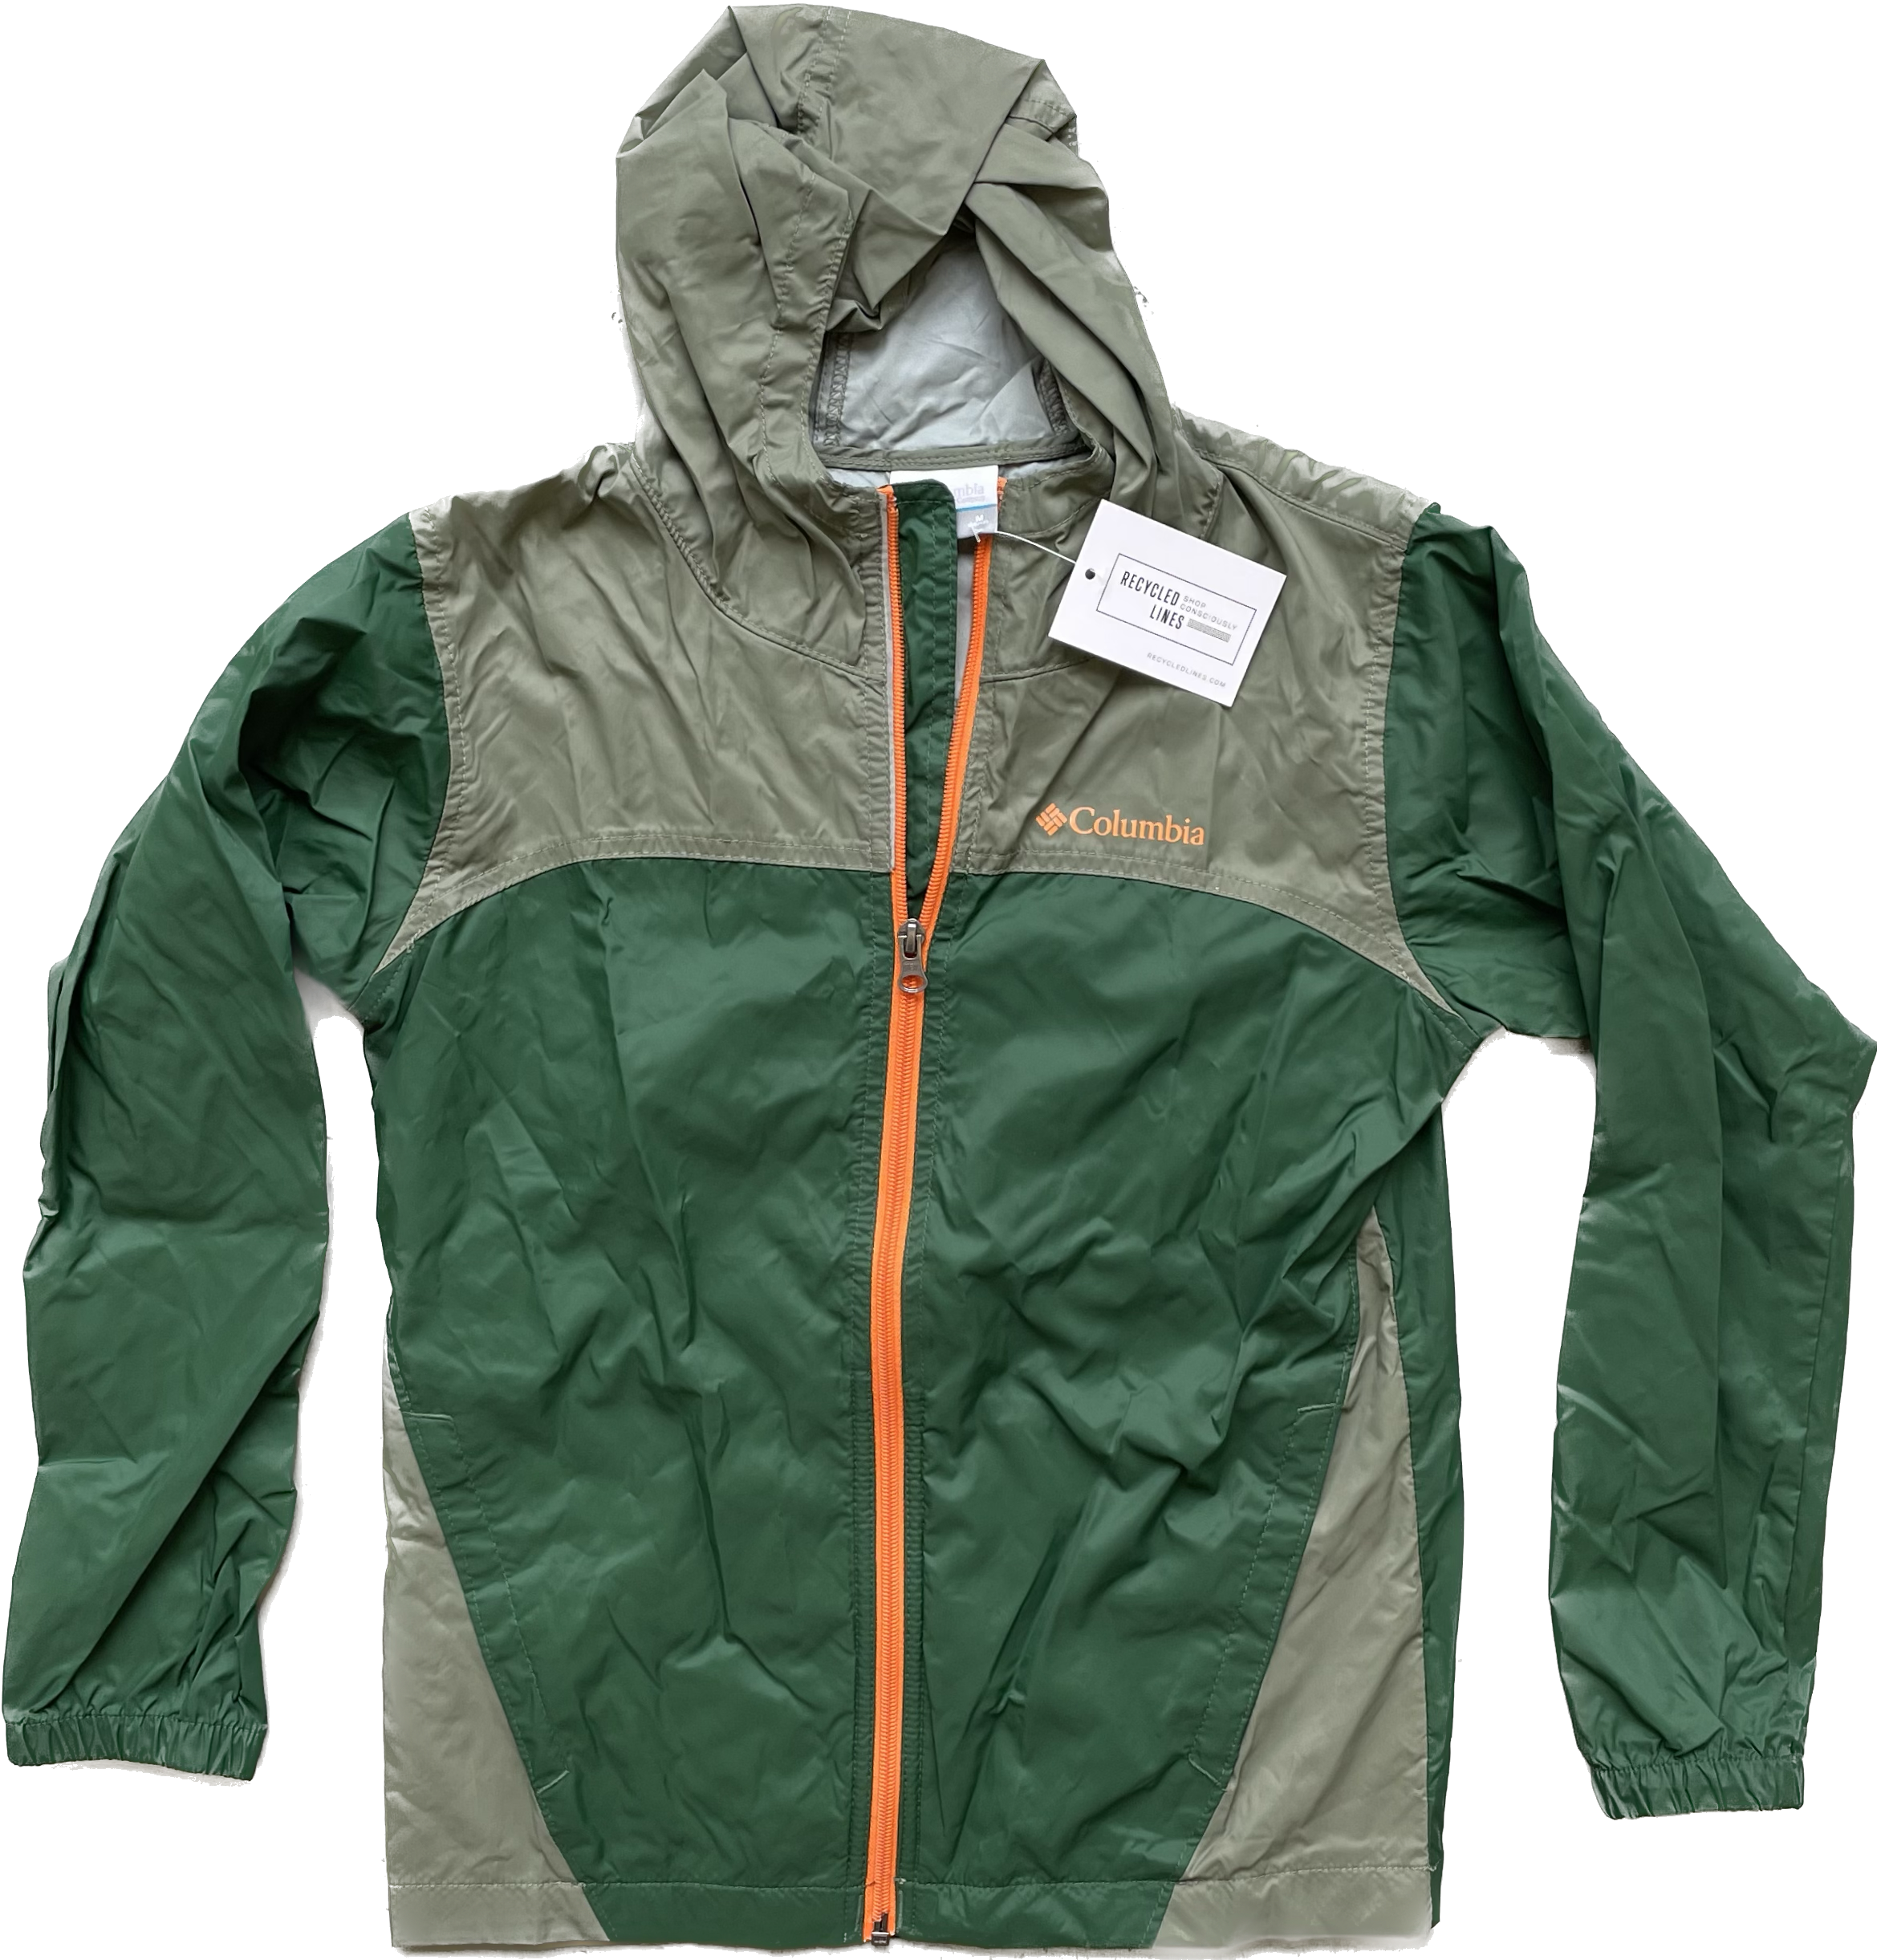 Columbia Rain Jacket, Olive/Forest Boys Size M (10/12)